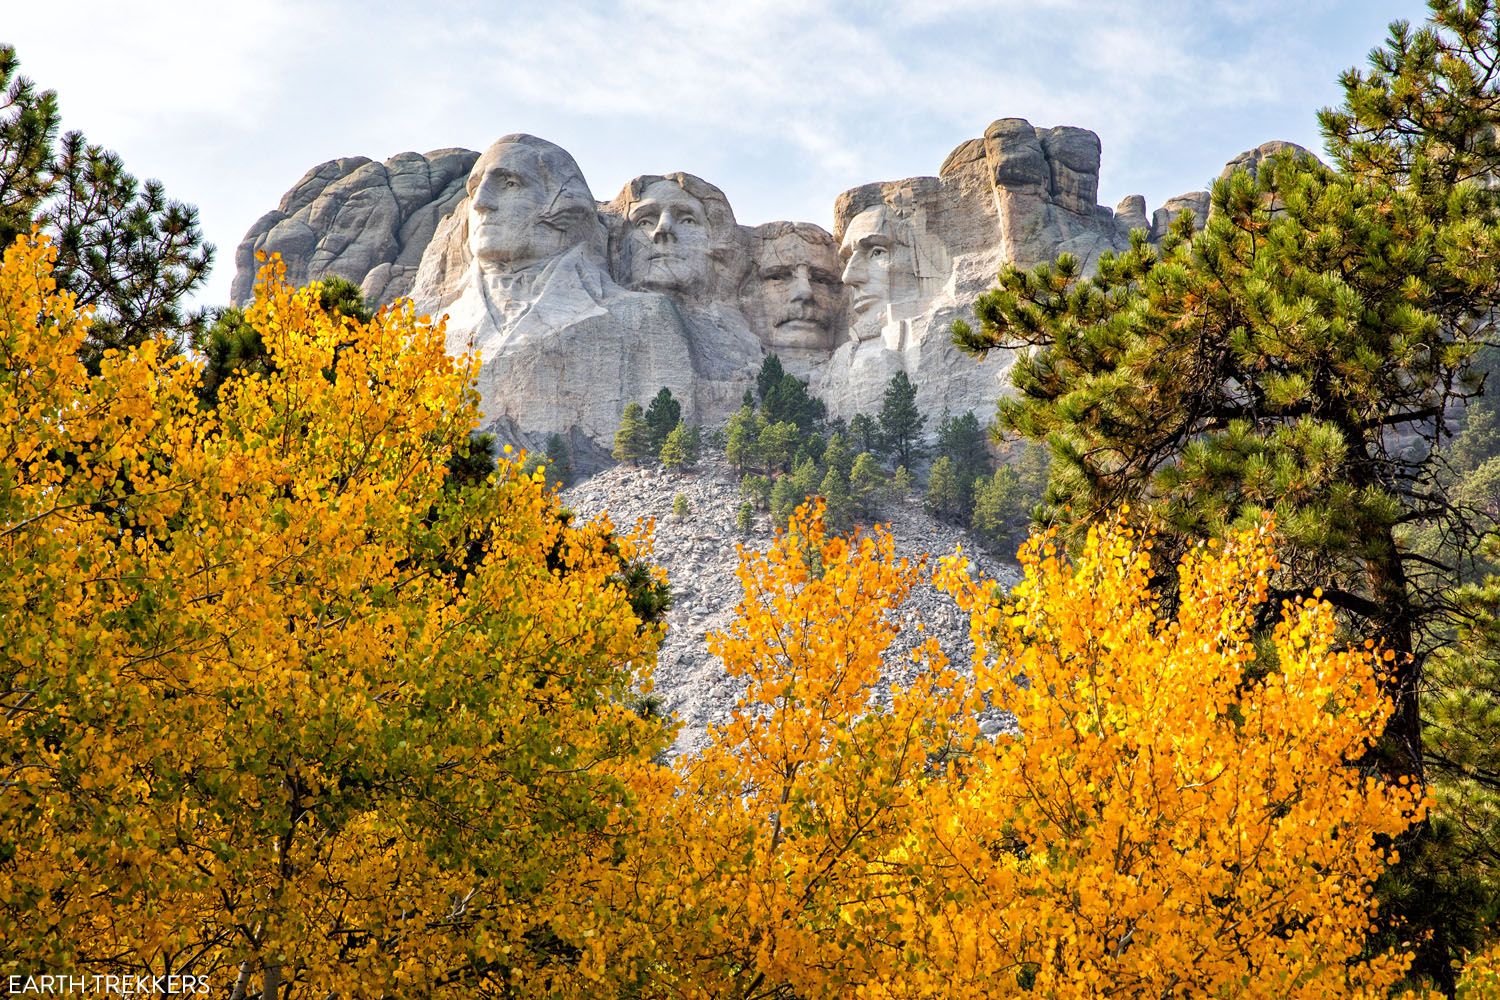 Mount Rushmore in October